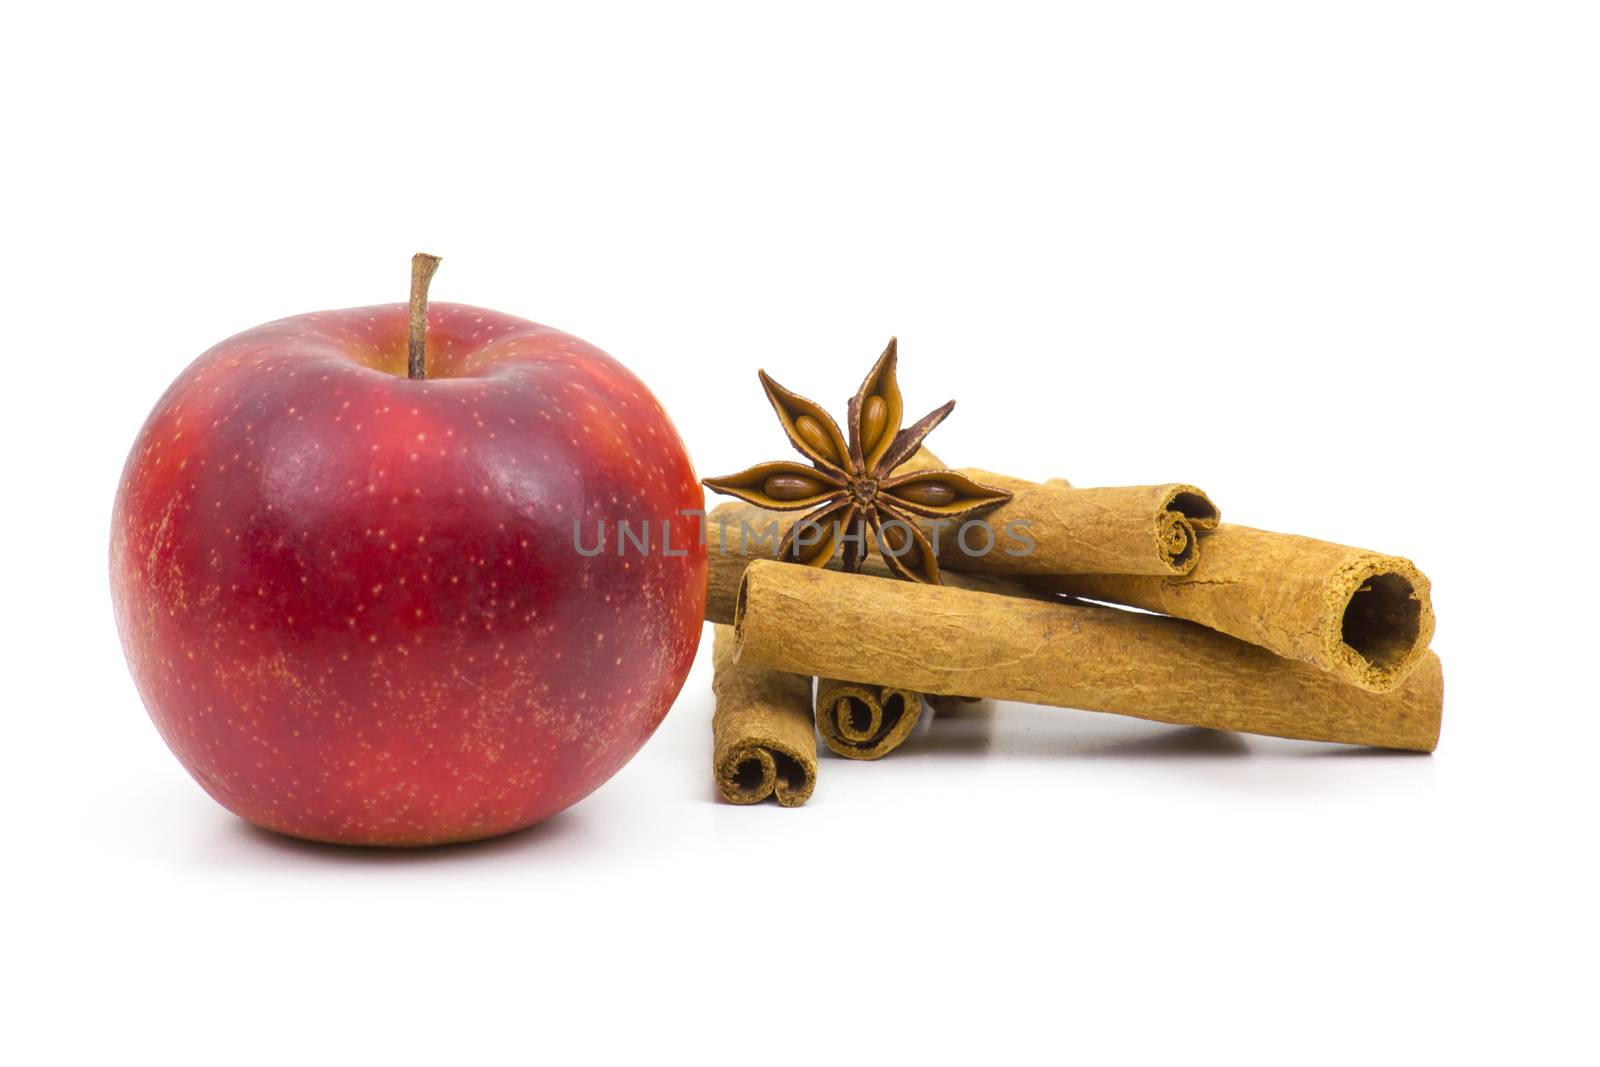 apple, cinnamon sticks and anise